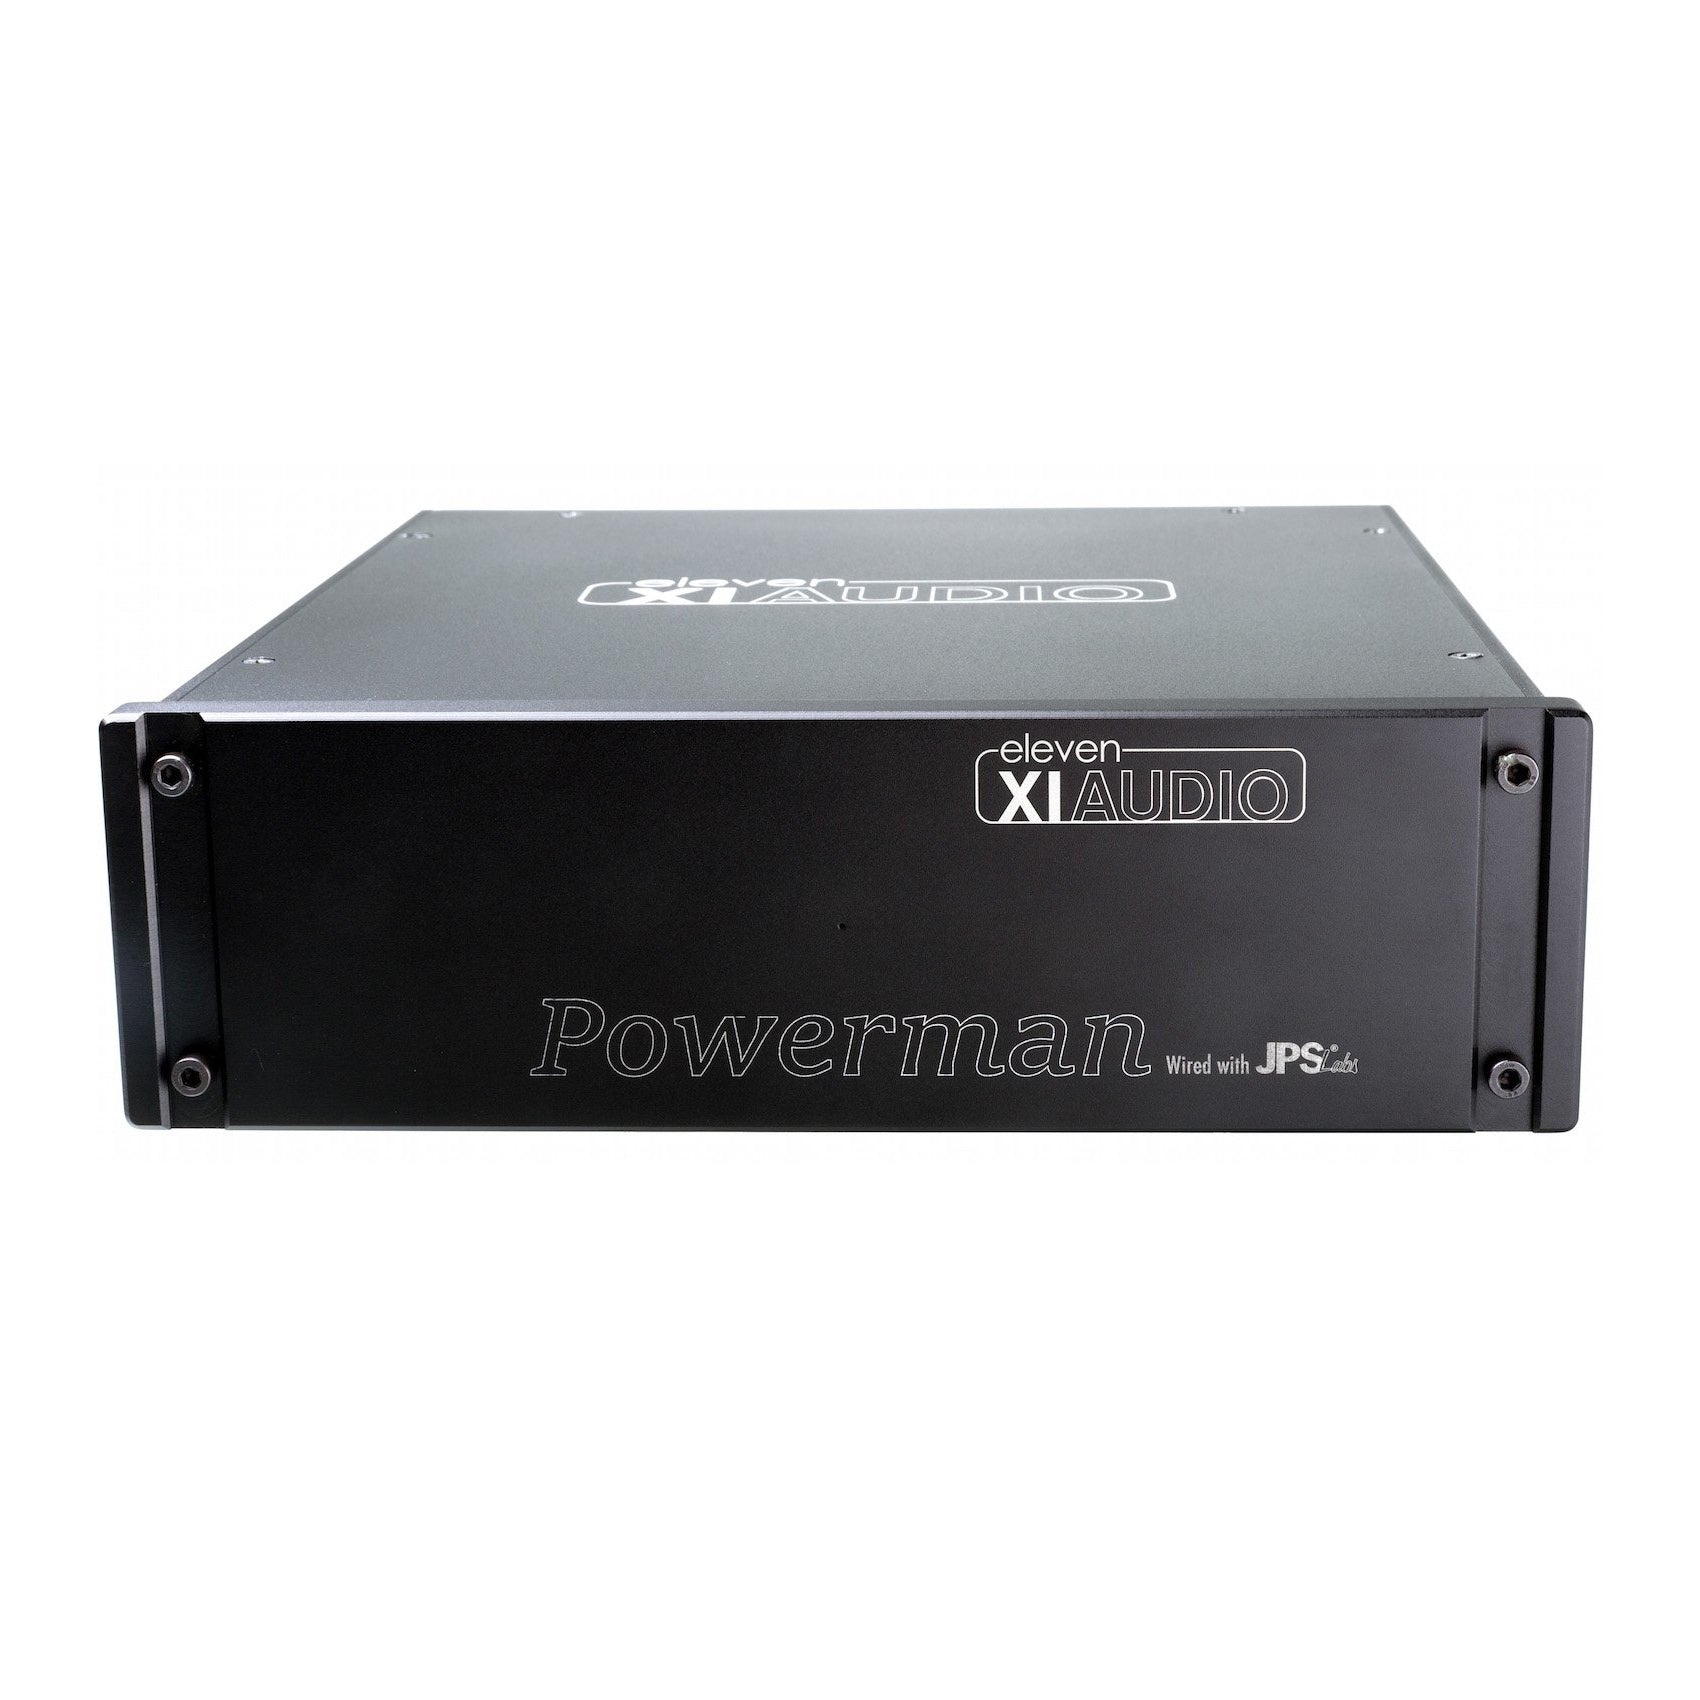 Eleven XI Audio Powerman External Power Supply for Formula S Amplifier